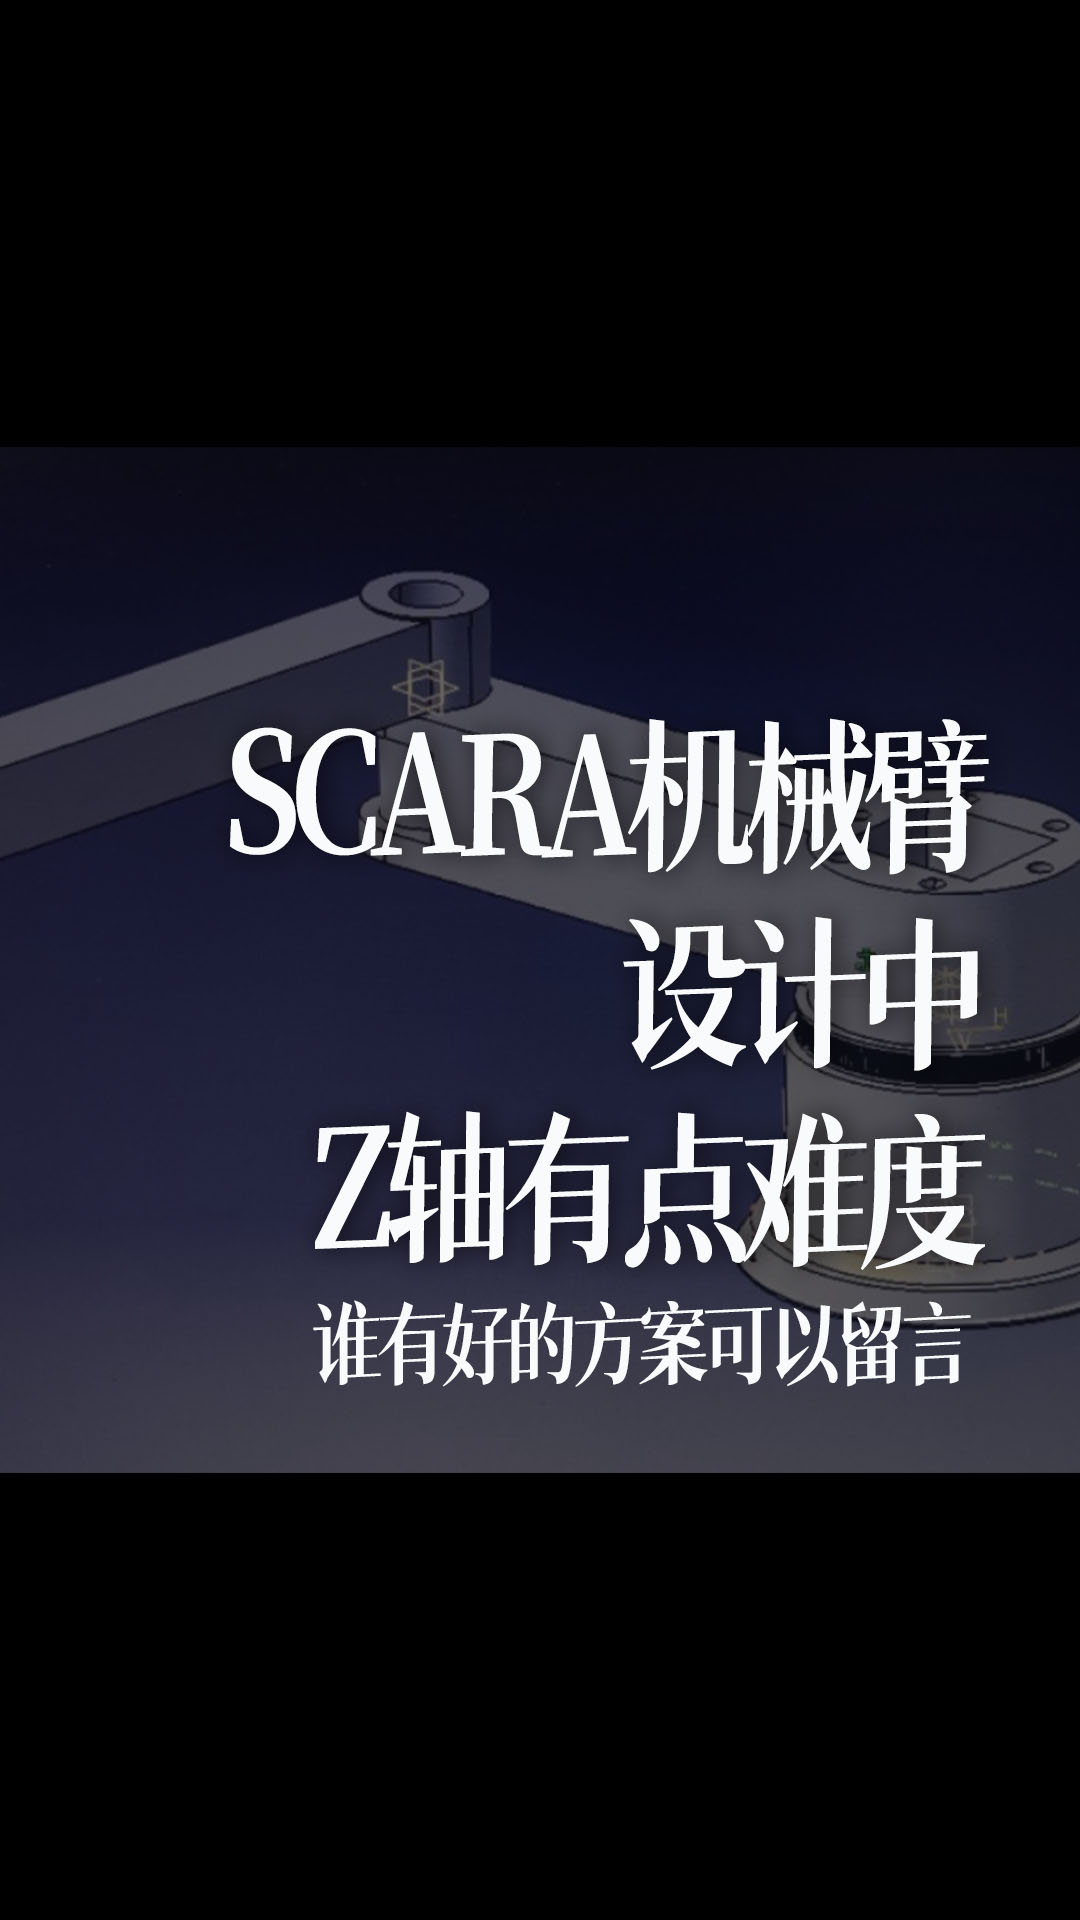 SCARA机械臂设计中，Z轴有点难度，谁有好的方案可以留言